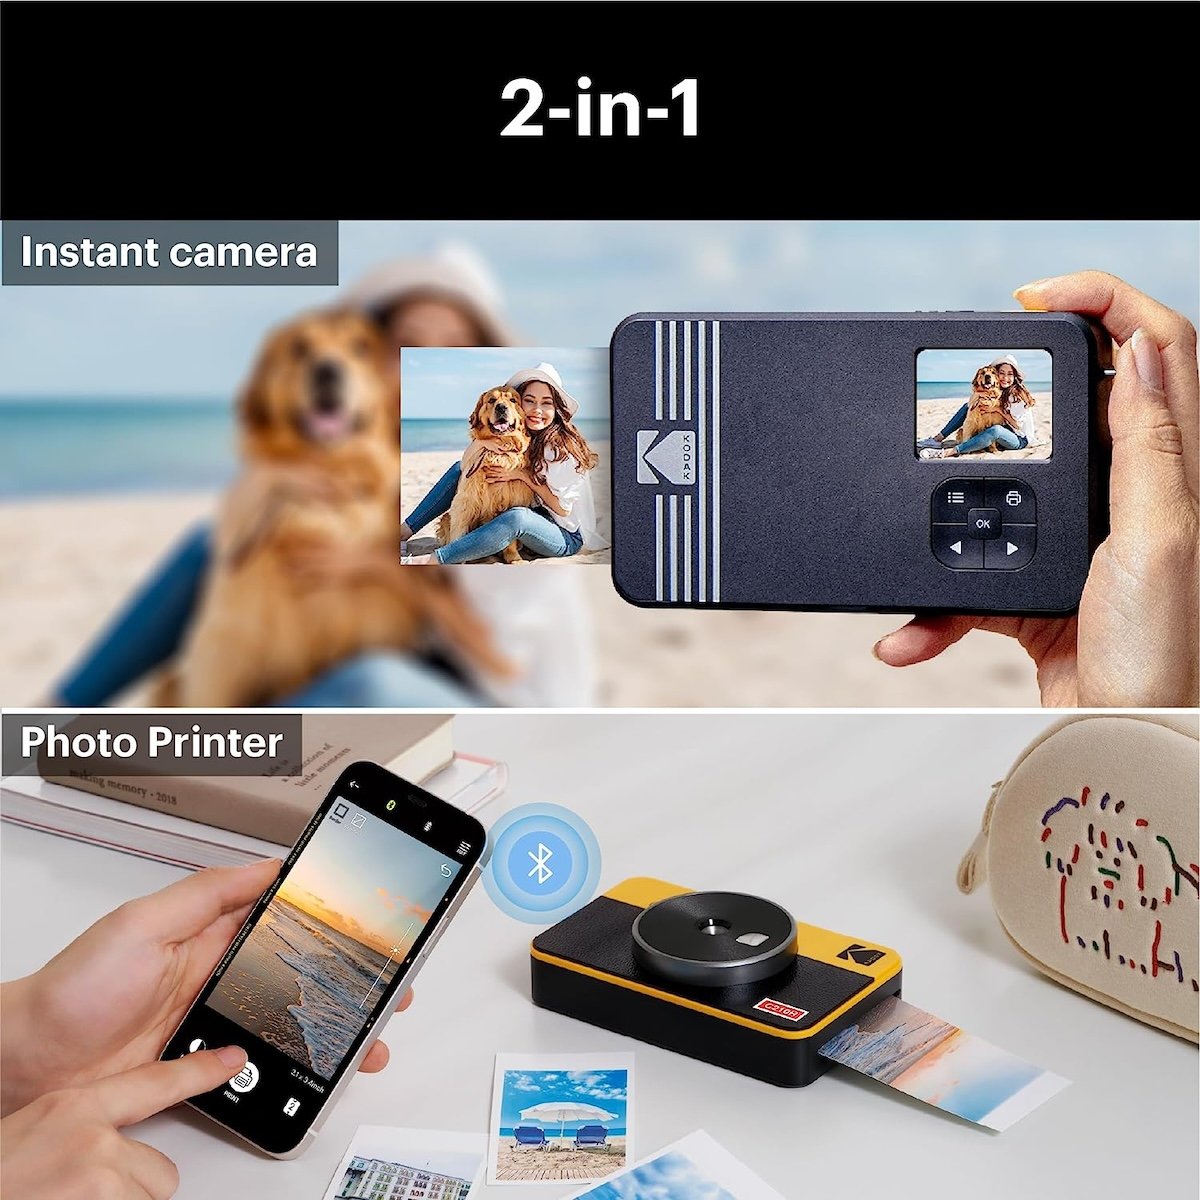 Product shot of the Koka Mini Shot 2, an iPhone photo printer and camera